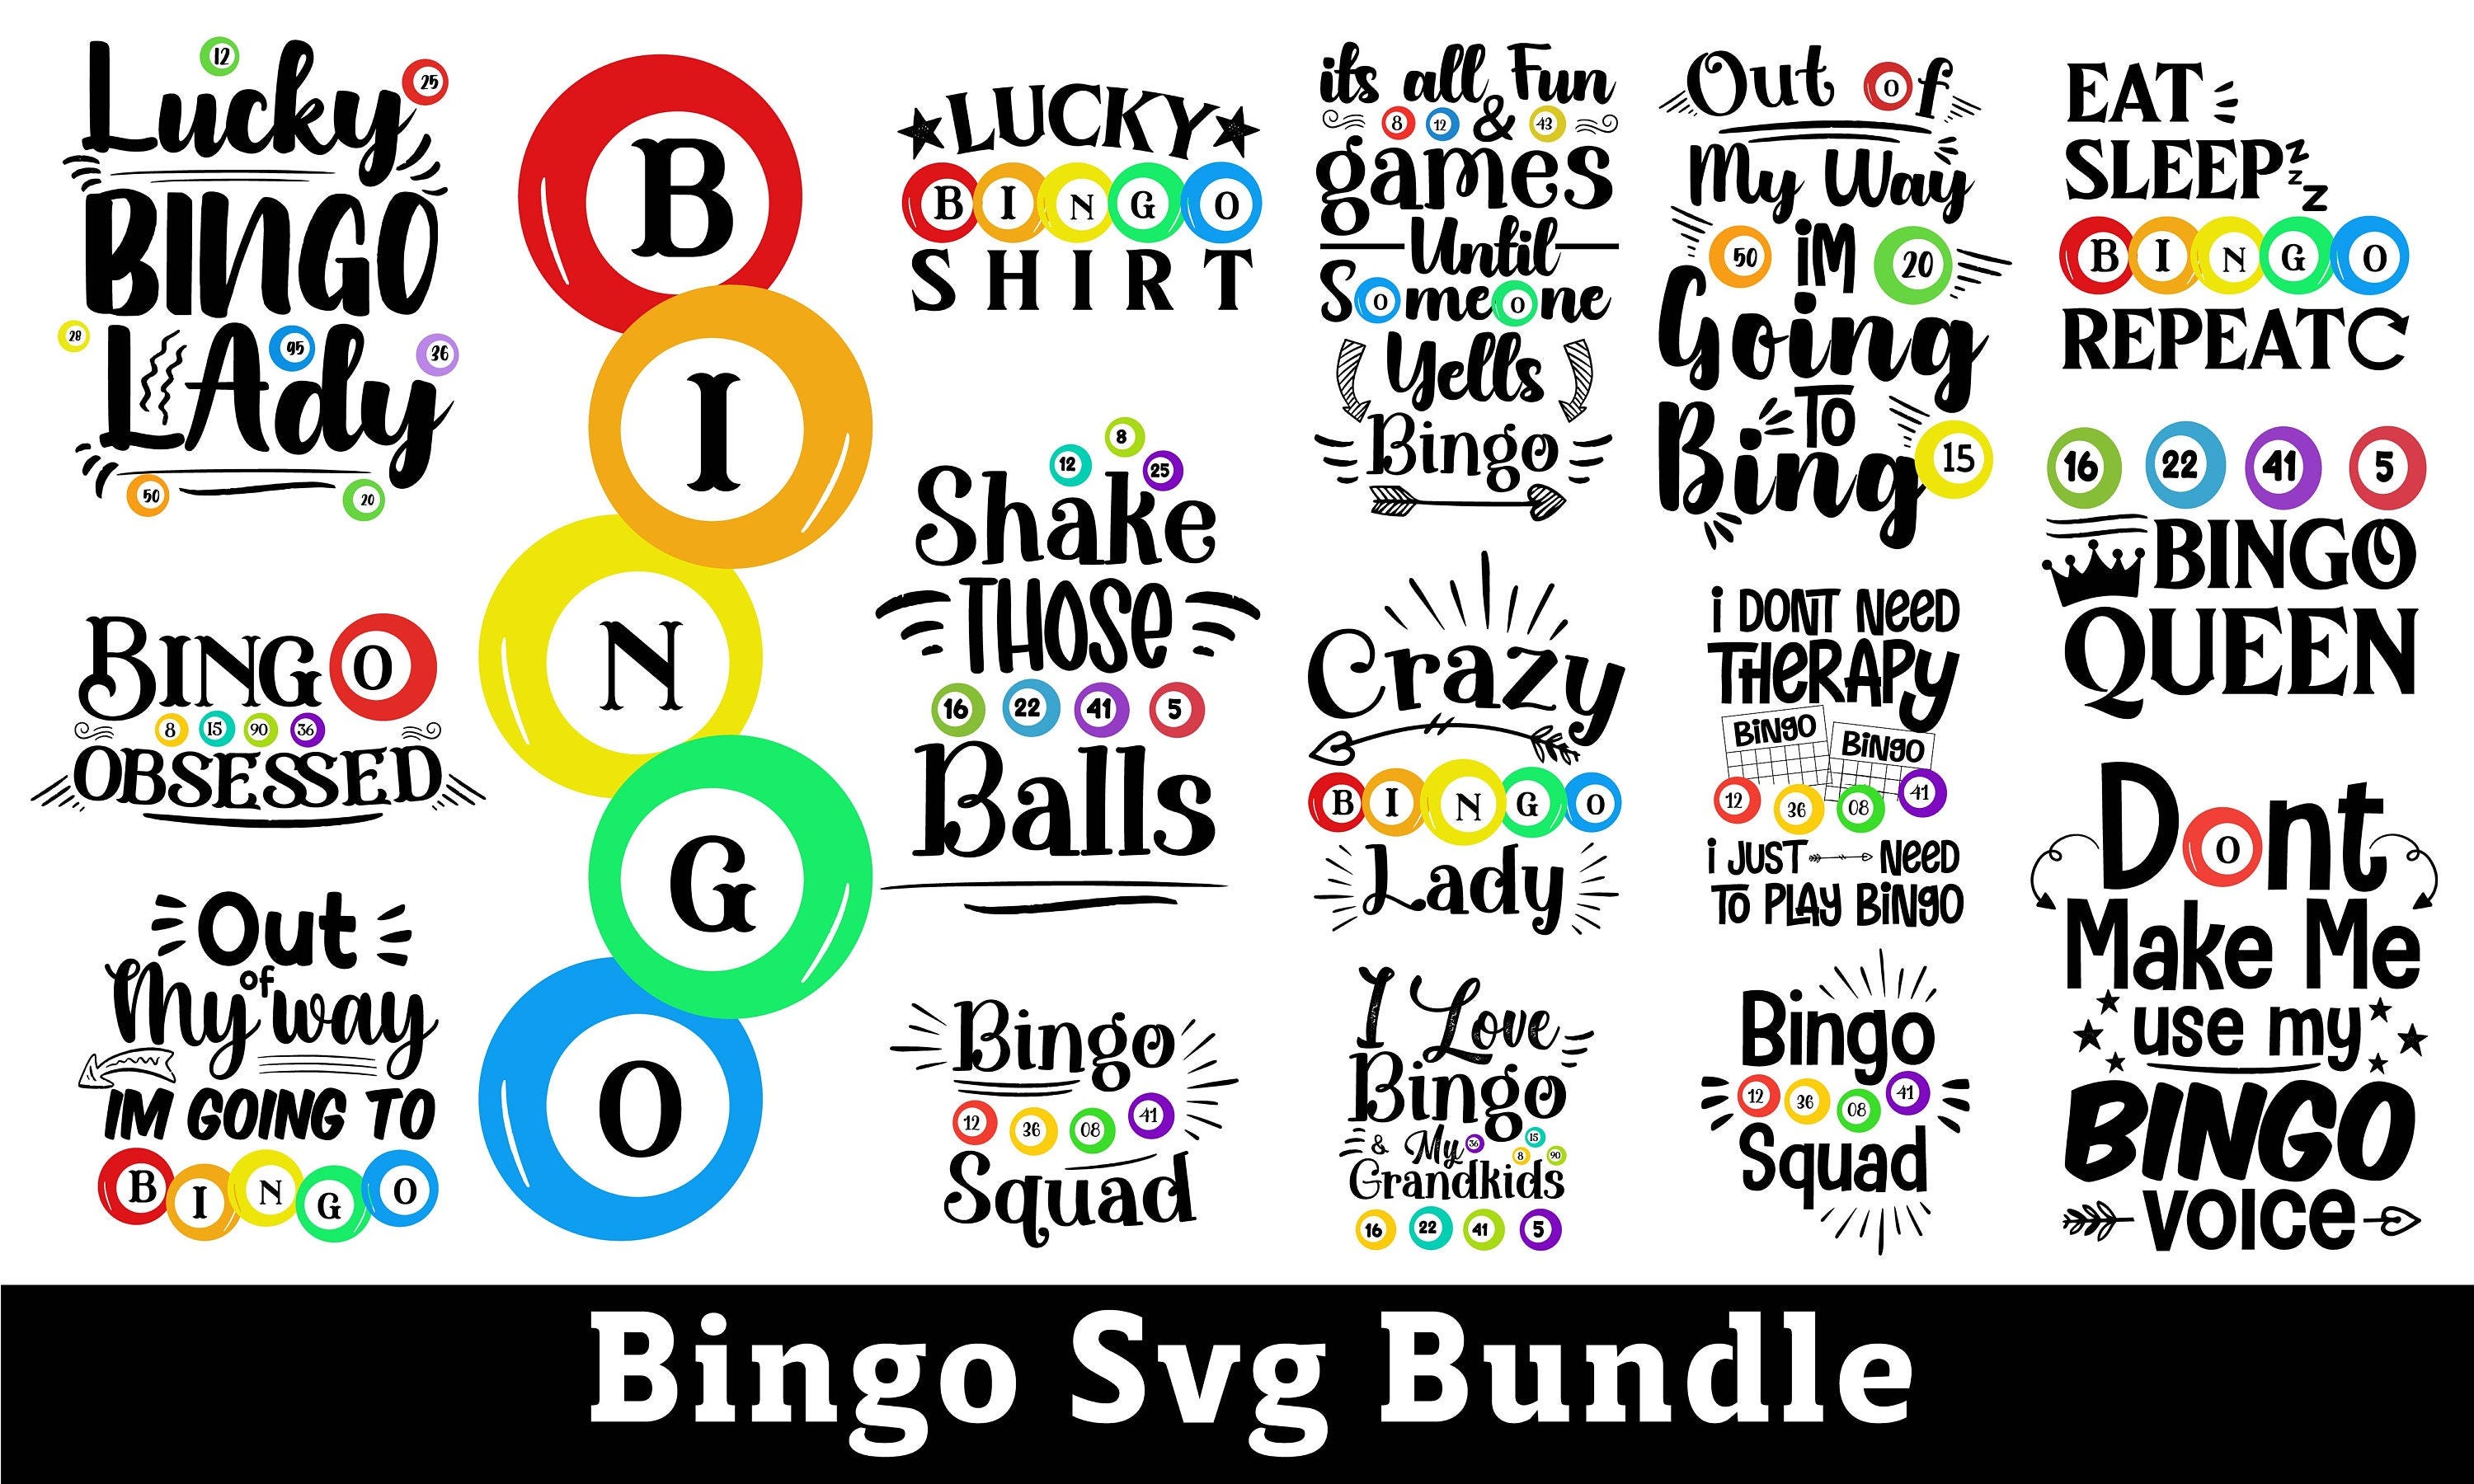 Birthday Bingo Svg, Bingo Svg For Shirt, Bingo Svg Png, Bingo Png And Svg, Bingo Games Svg, Bingo Balls Svg, Bingo Svg Bundle